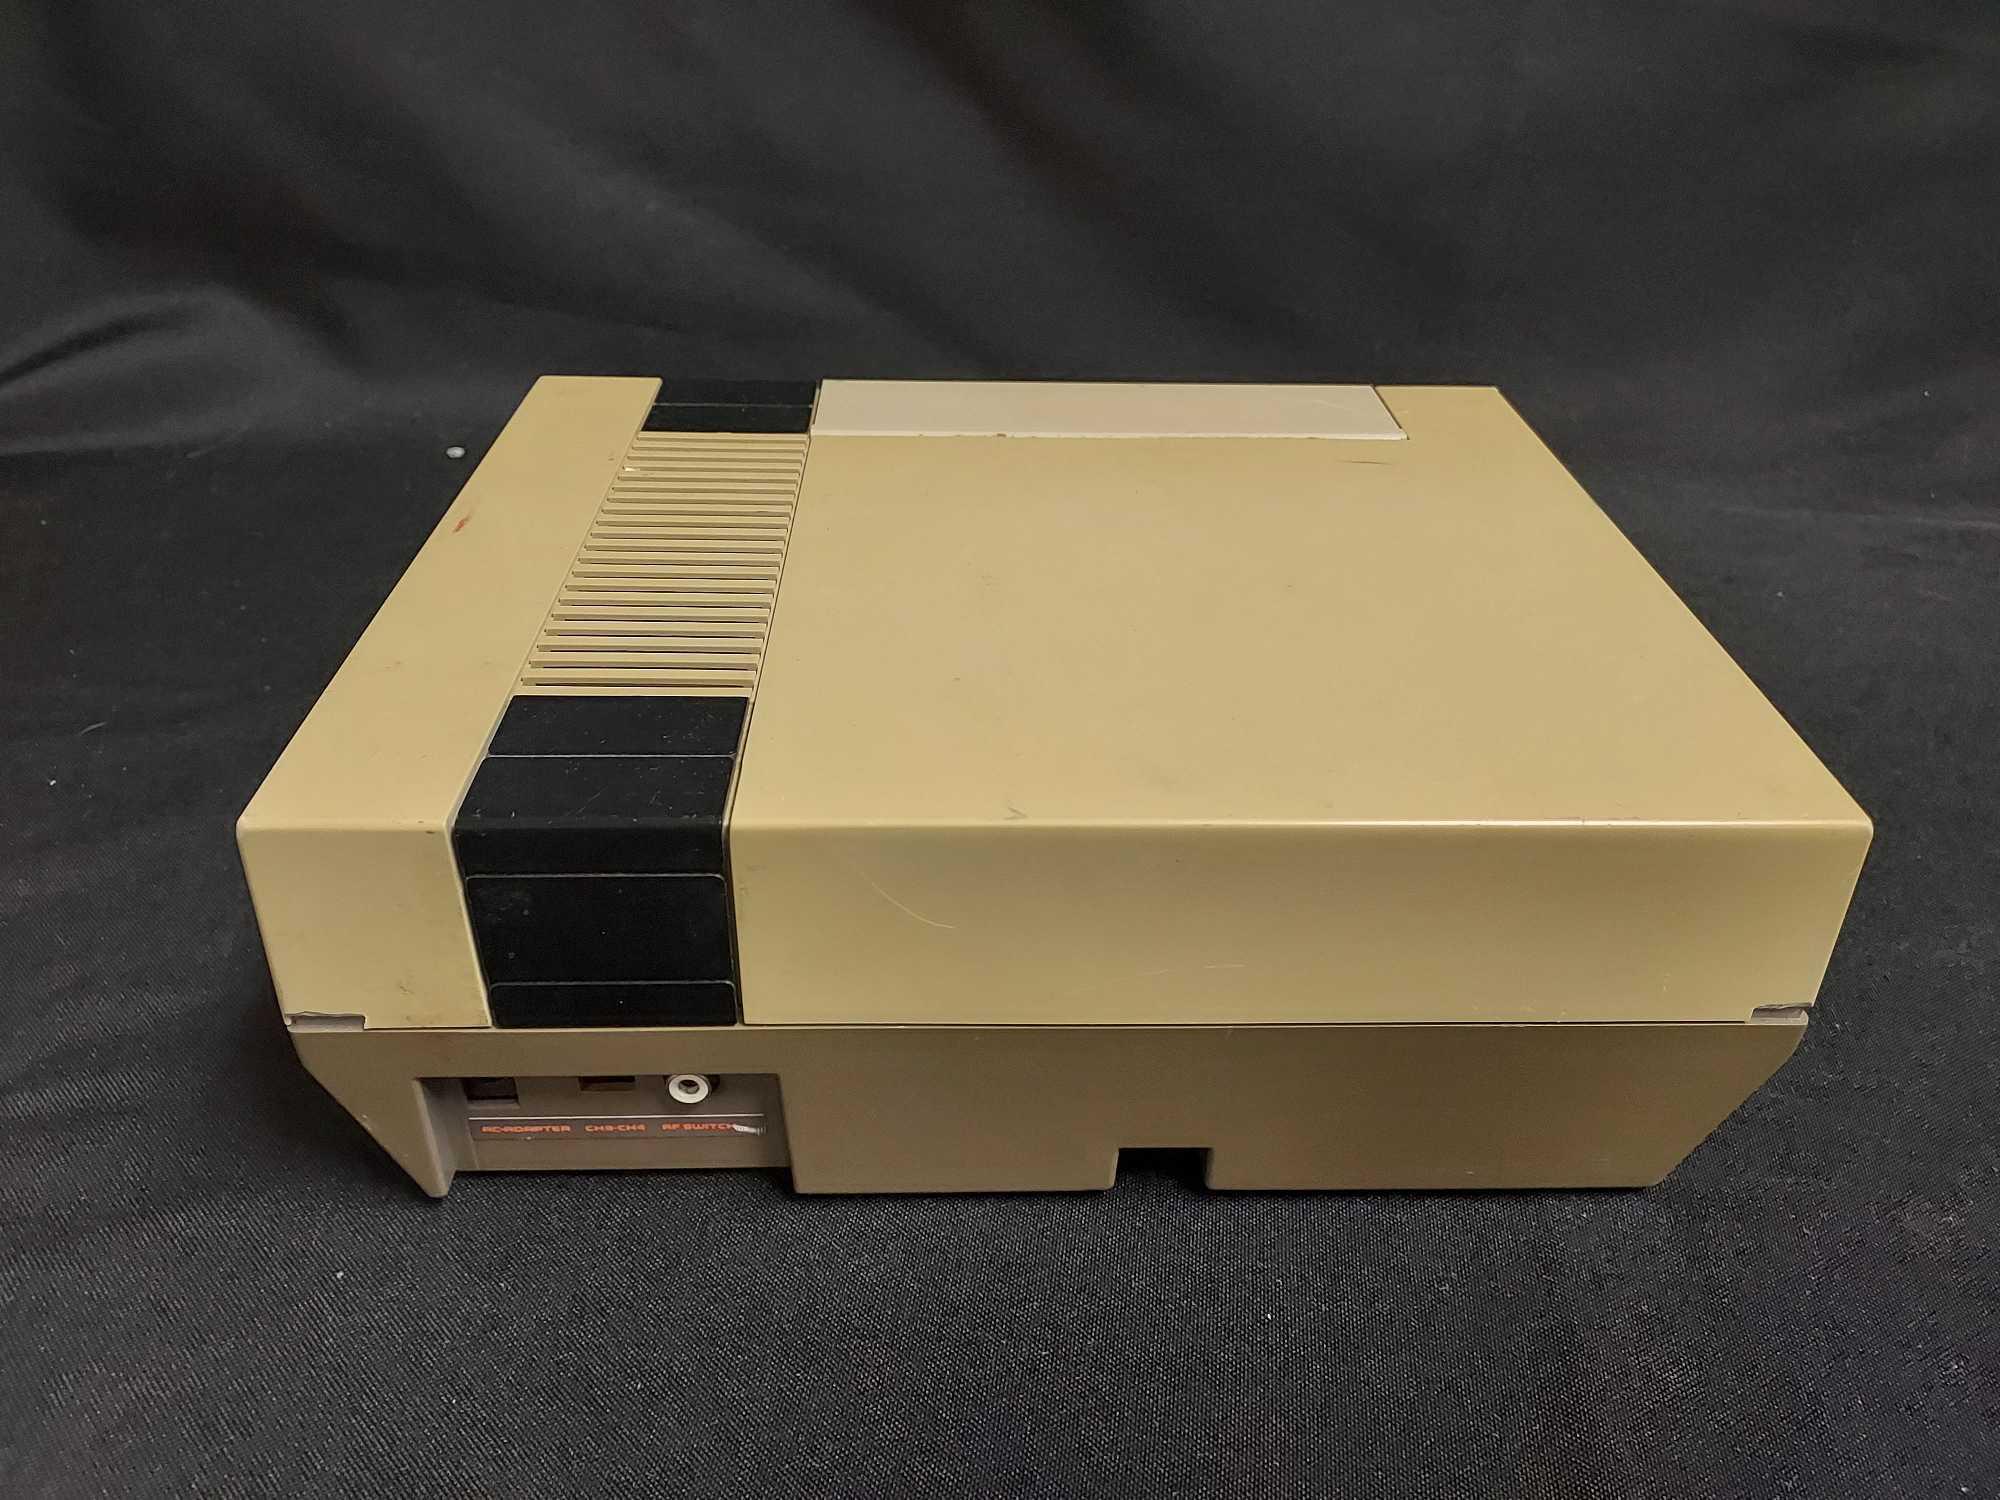 Nintendo NES Entertainment System w/ NES Advantage Controller, 15 Games, Zapper, & Controllers